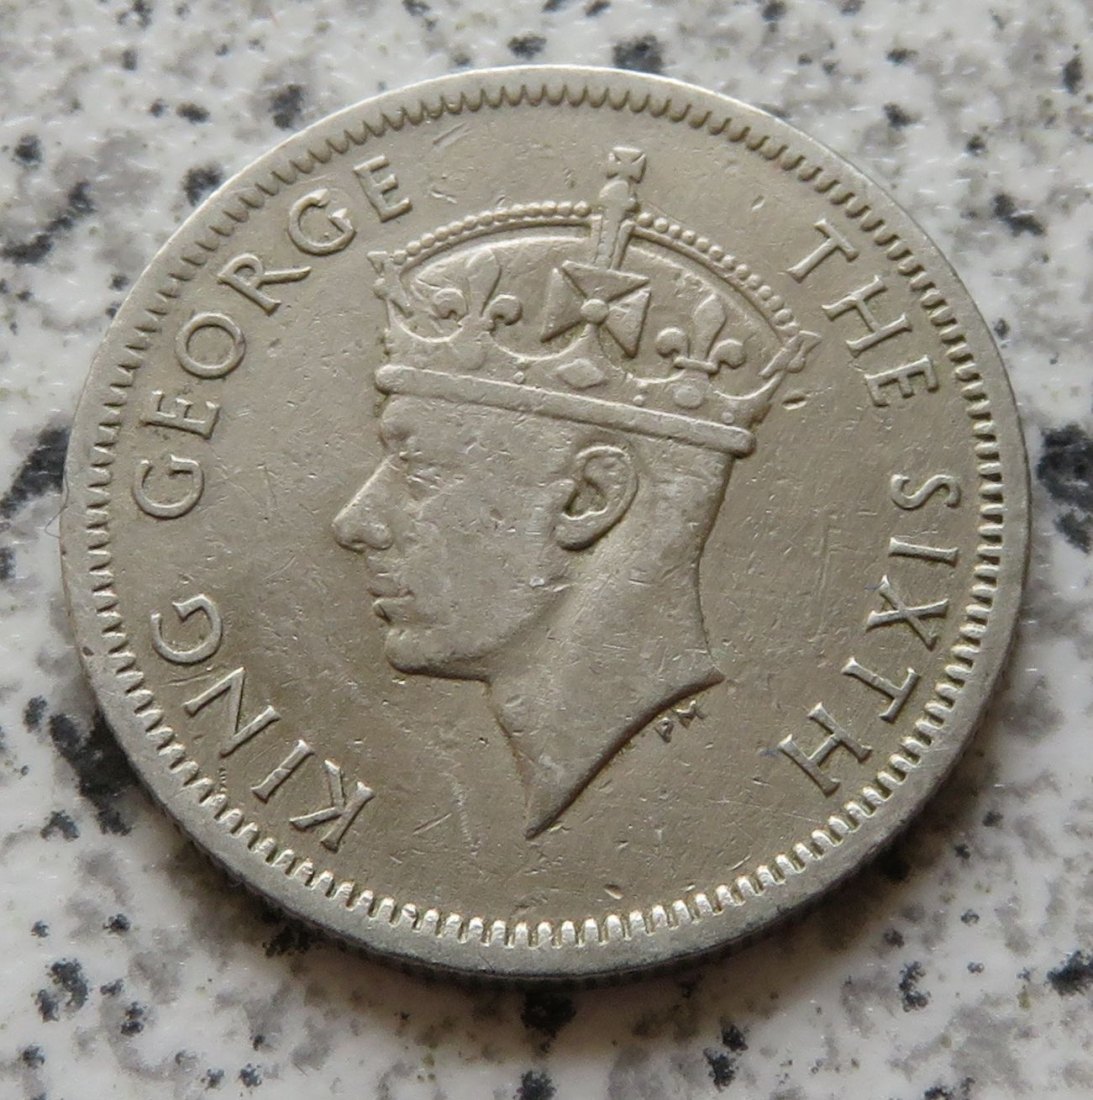  Malaya 10 Cents 1948   